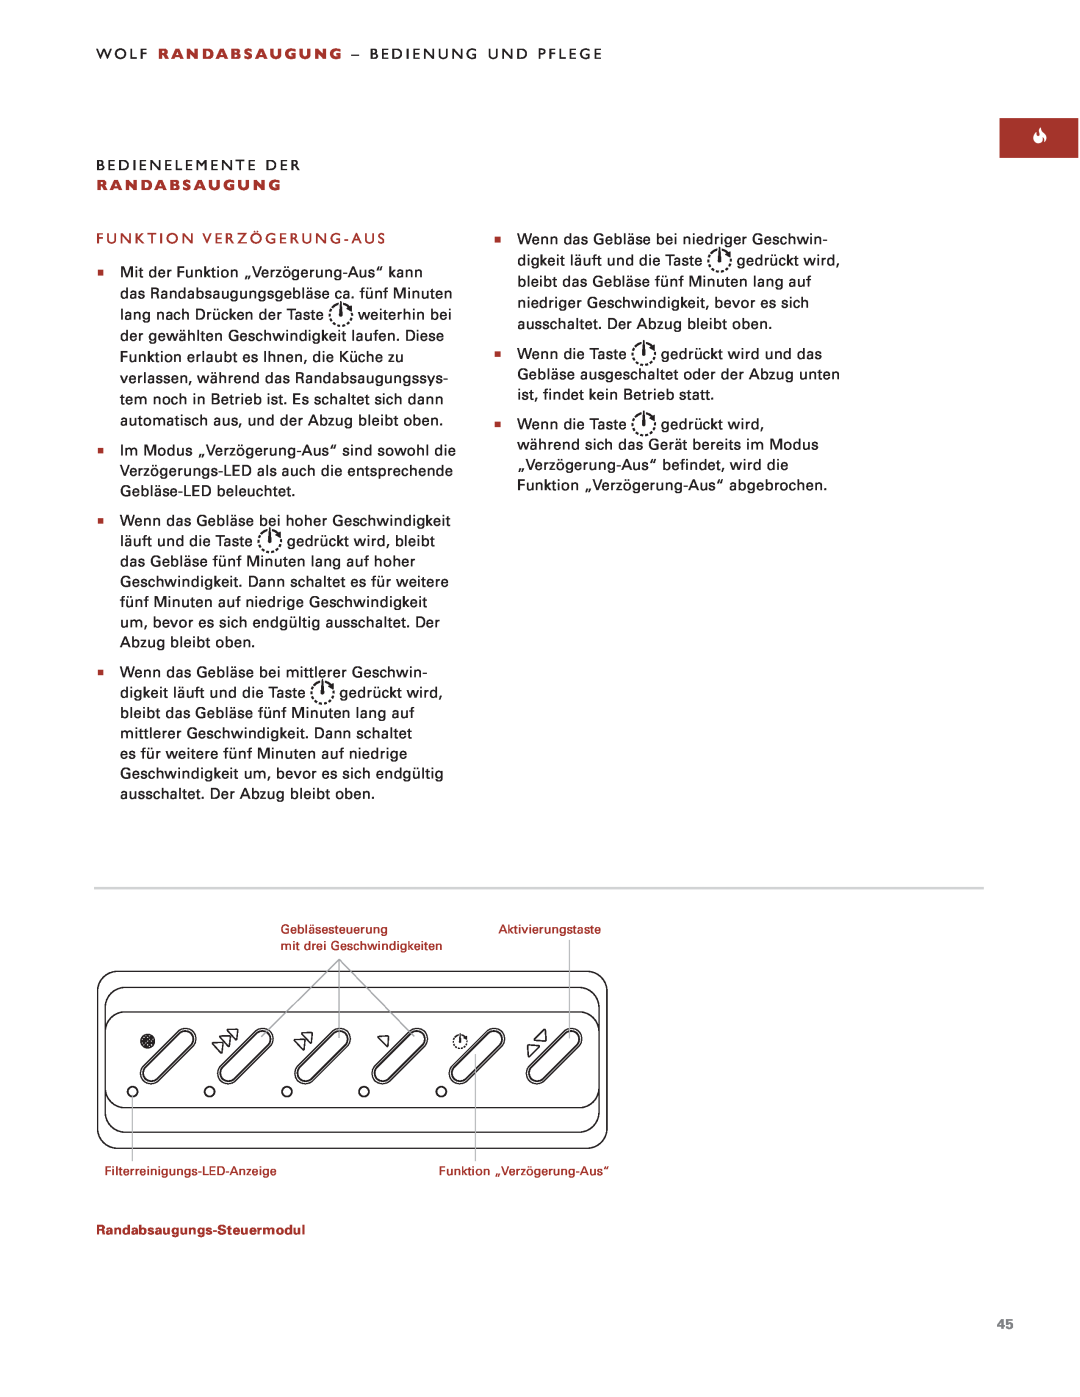 Sub-Zero Downdraft Ventilation manual Funktion Verzögerung - Aus, Randabsaugungs-Steuermodul 